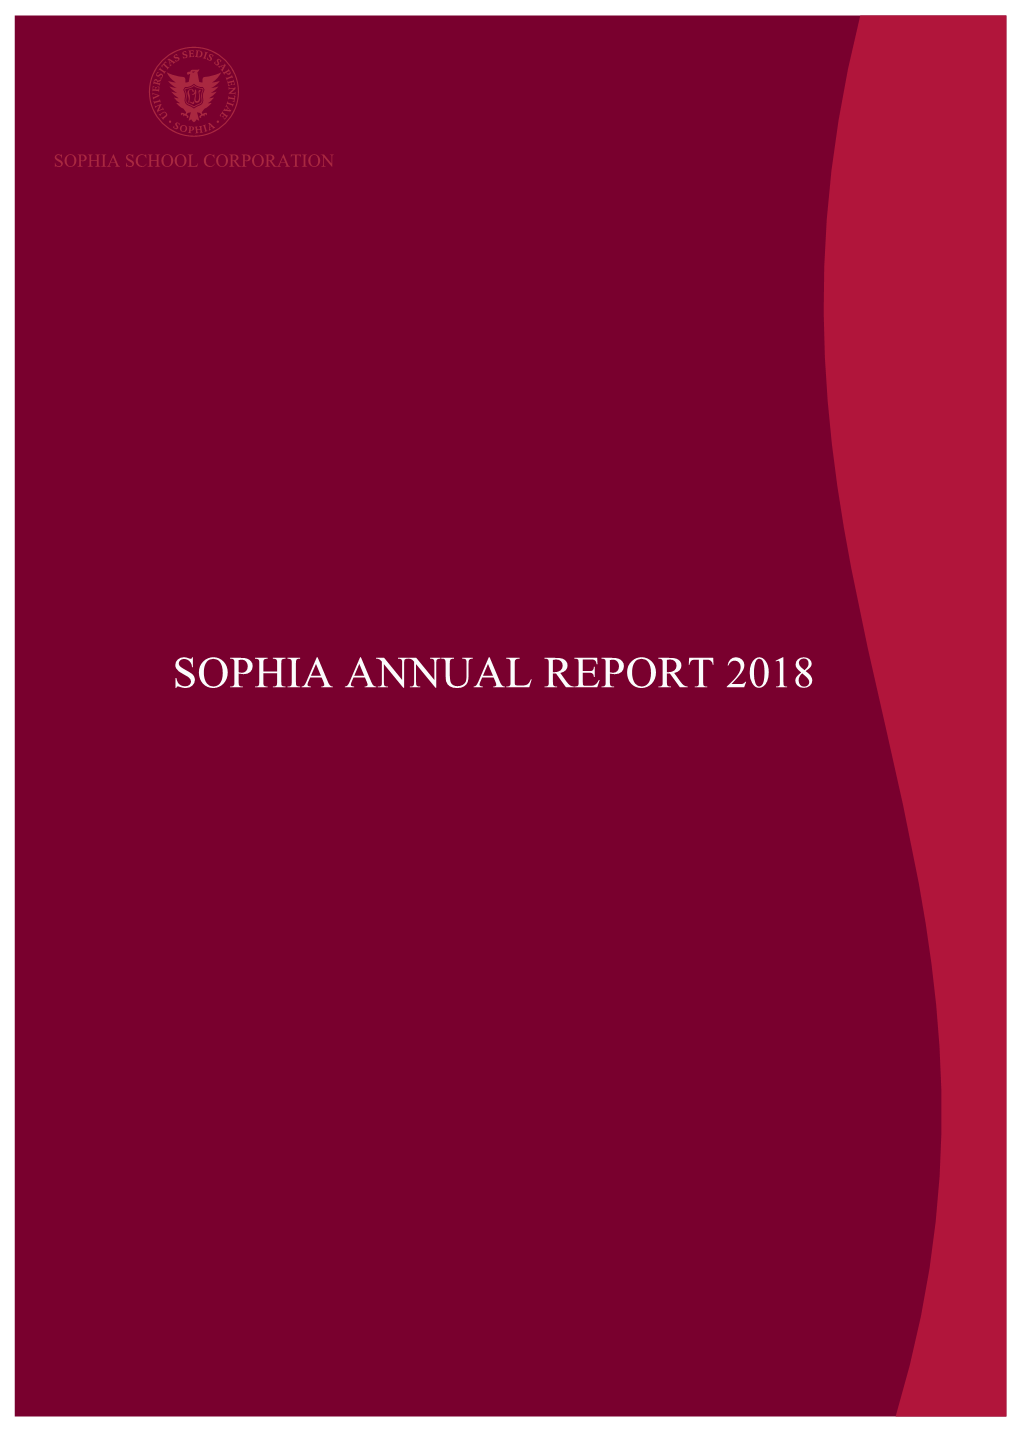 SOPHIA ANNUAL REPORT 2018 Sophia School Corporation